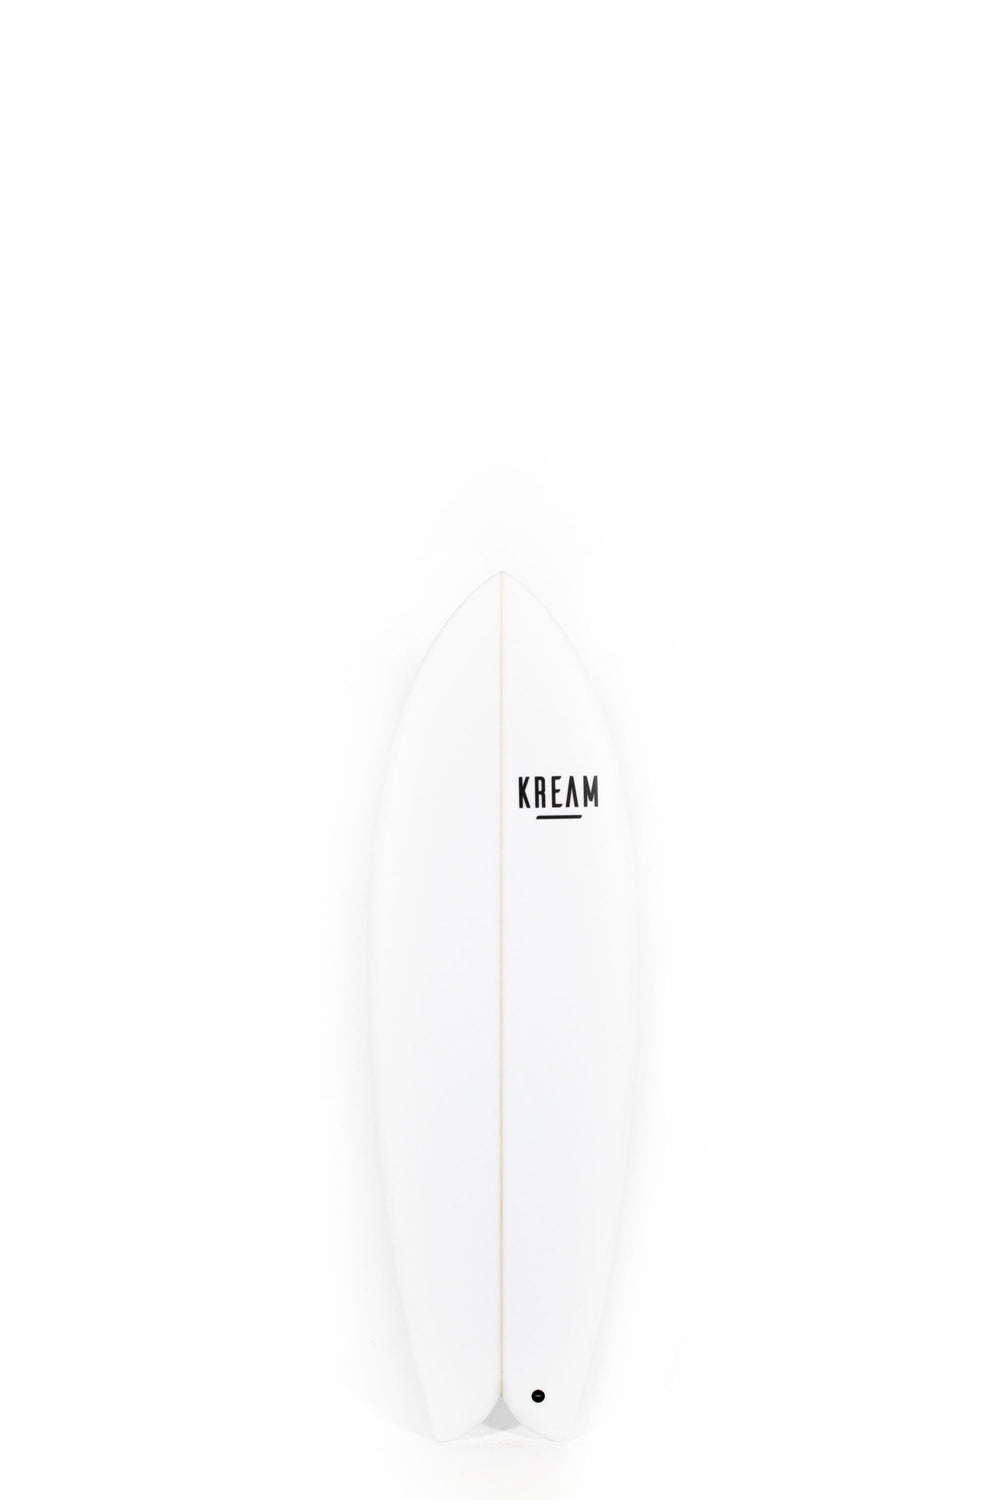 Pukas Surf Shop - Kream Surfboards - FISH - 5'6